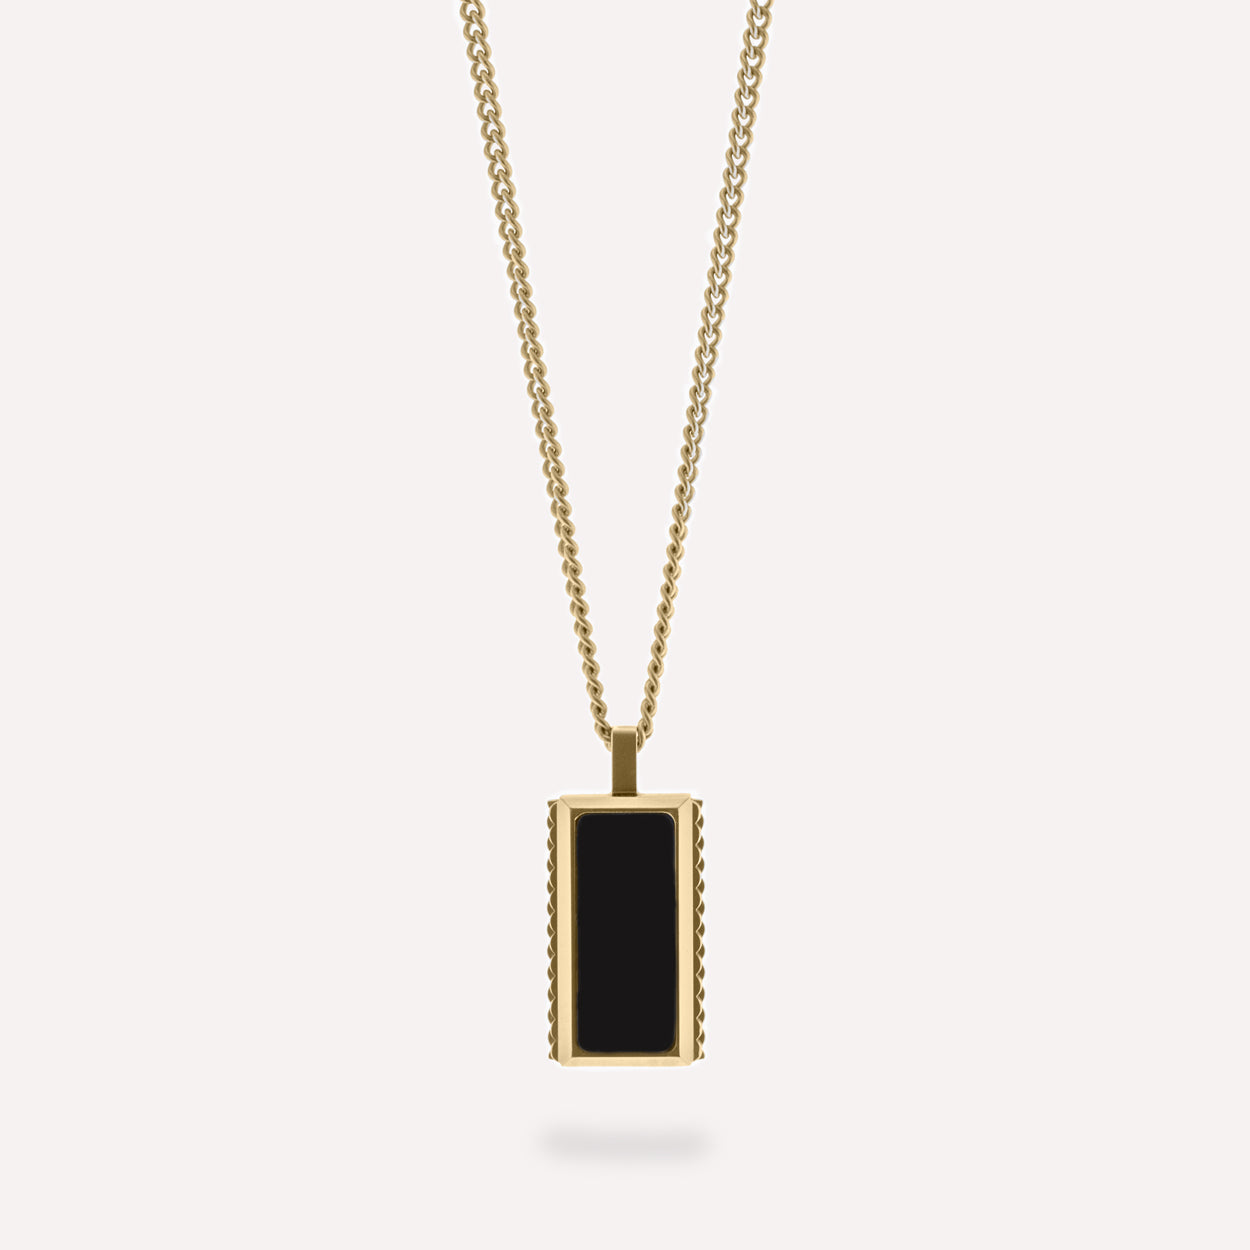 Hatton Gemstone Necklace 18K Gold/Black Onyx Adjustable 60-70cm/24-28'